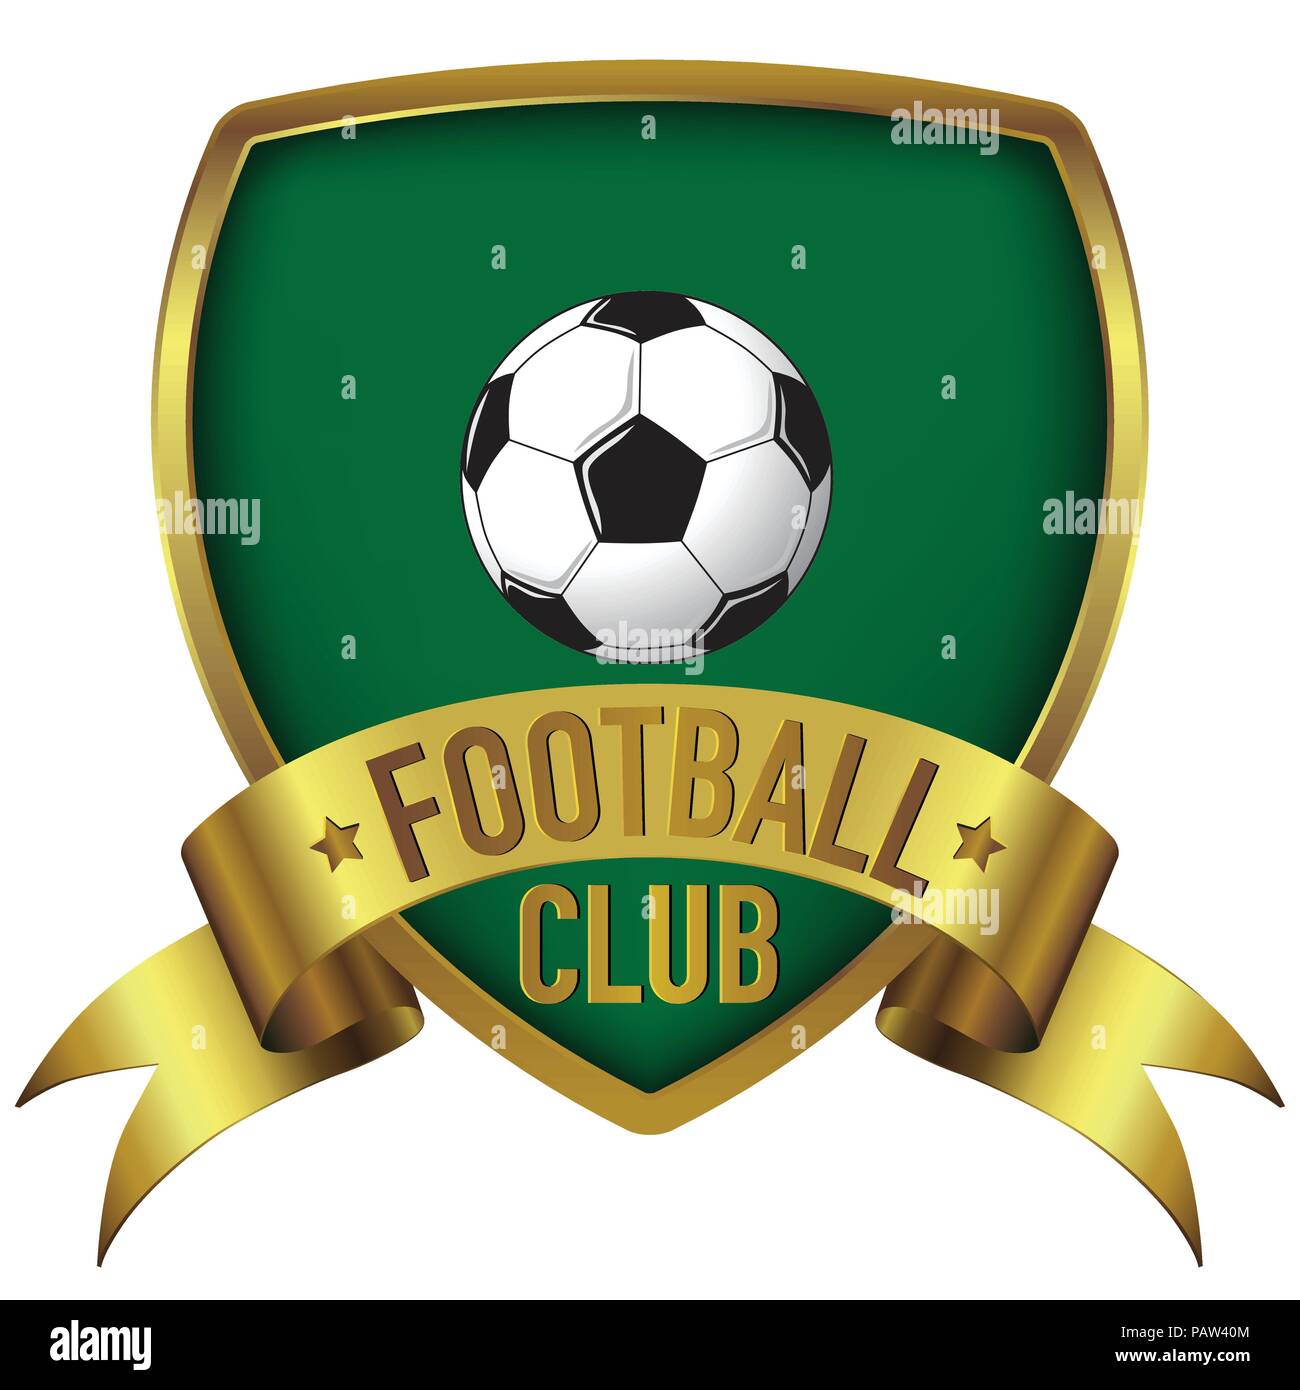 Club Football logo design en fond vert avec châssis d'or et ruban Illustration de Vecteur